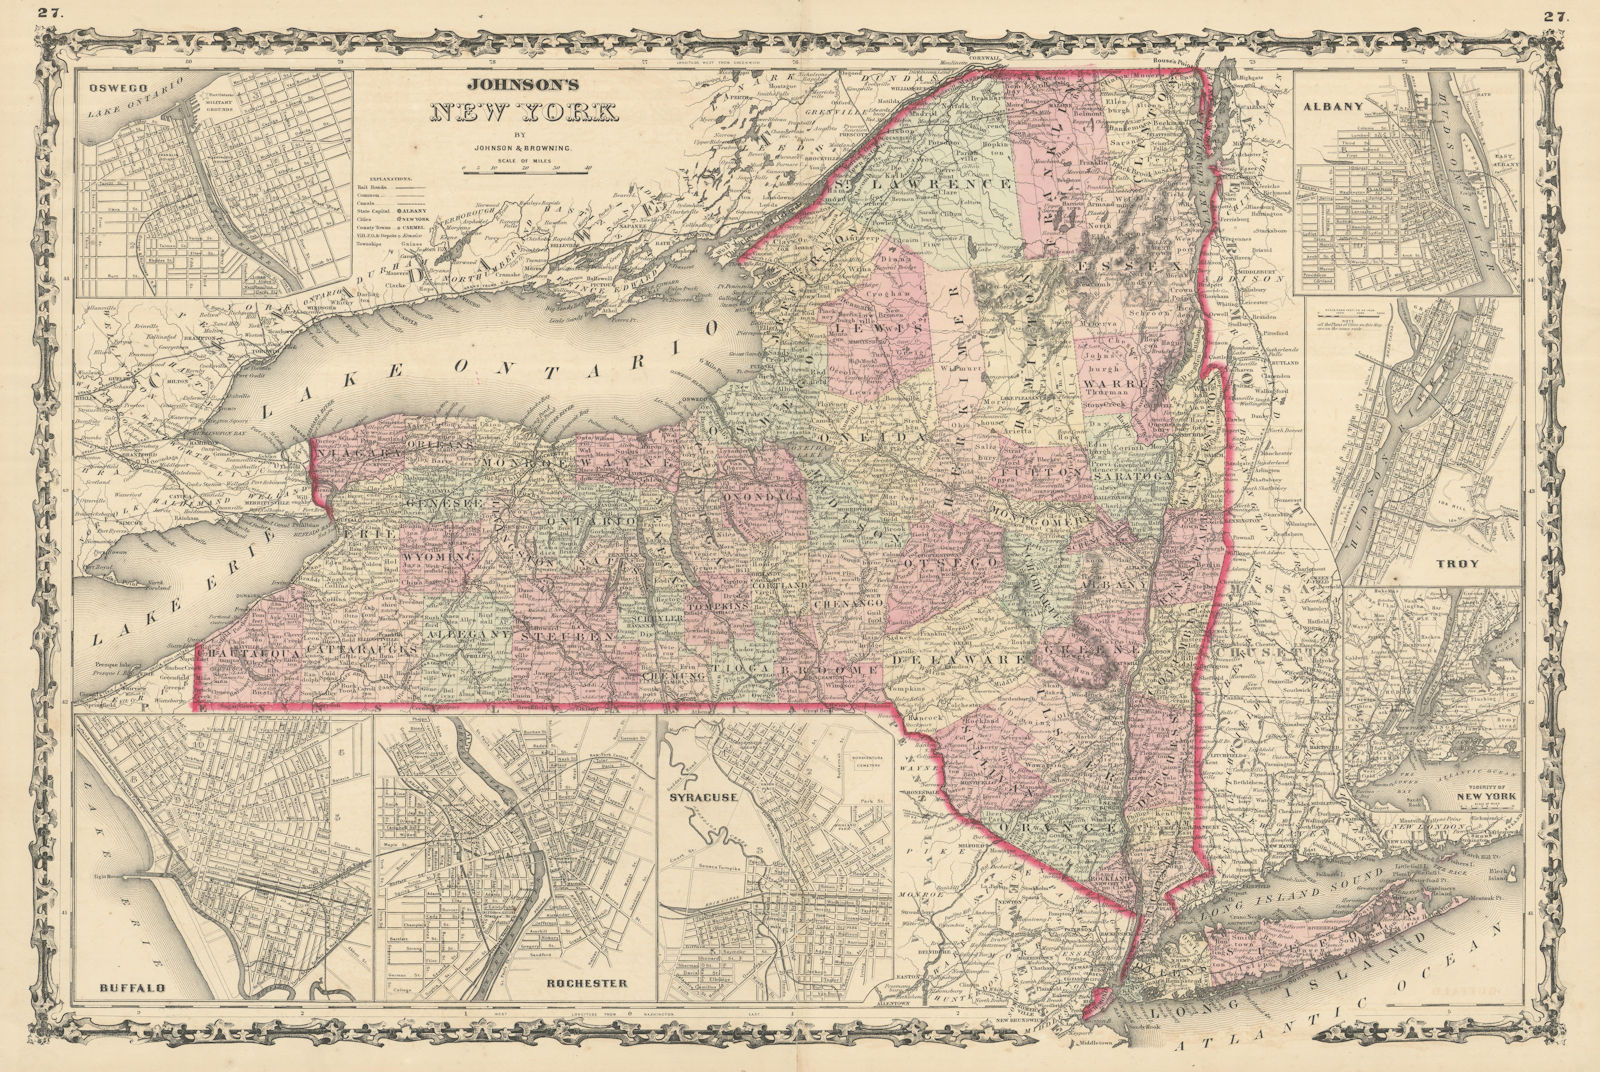 Johnson's New York state map. Albany Troy Rochester Buffalo Syracuse 1861